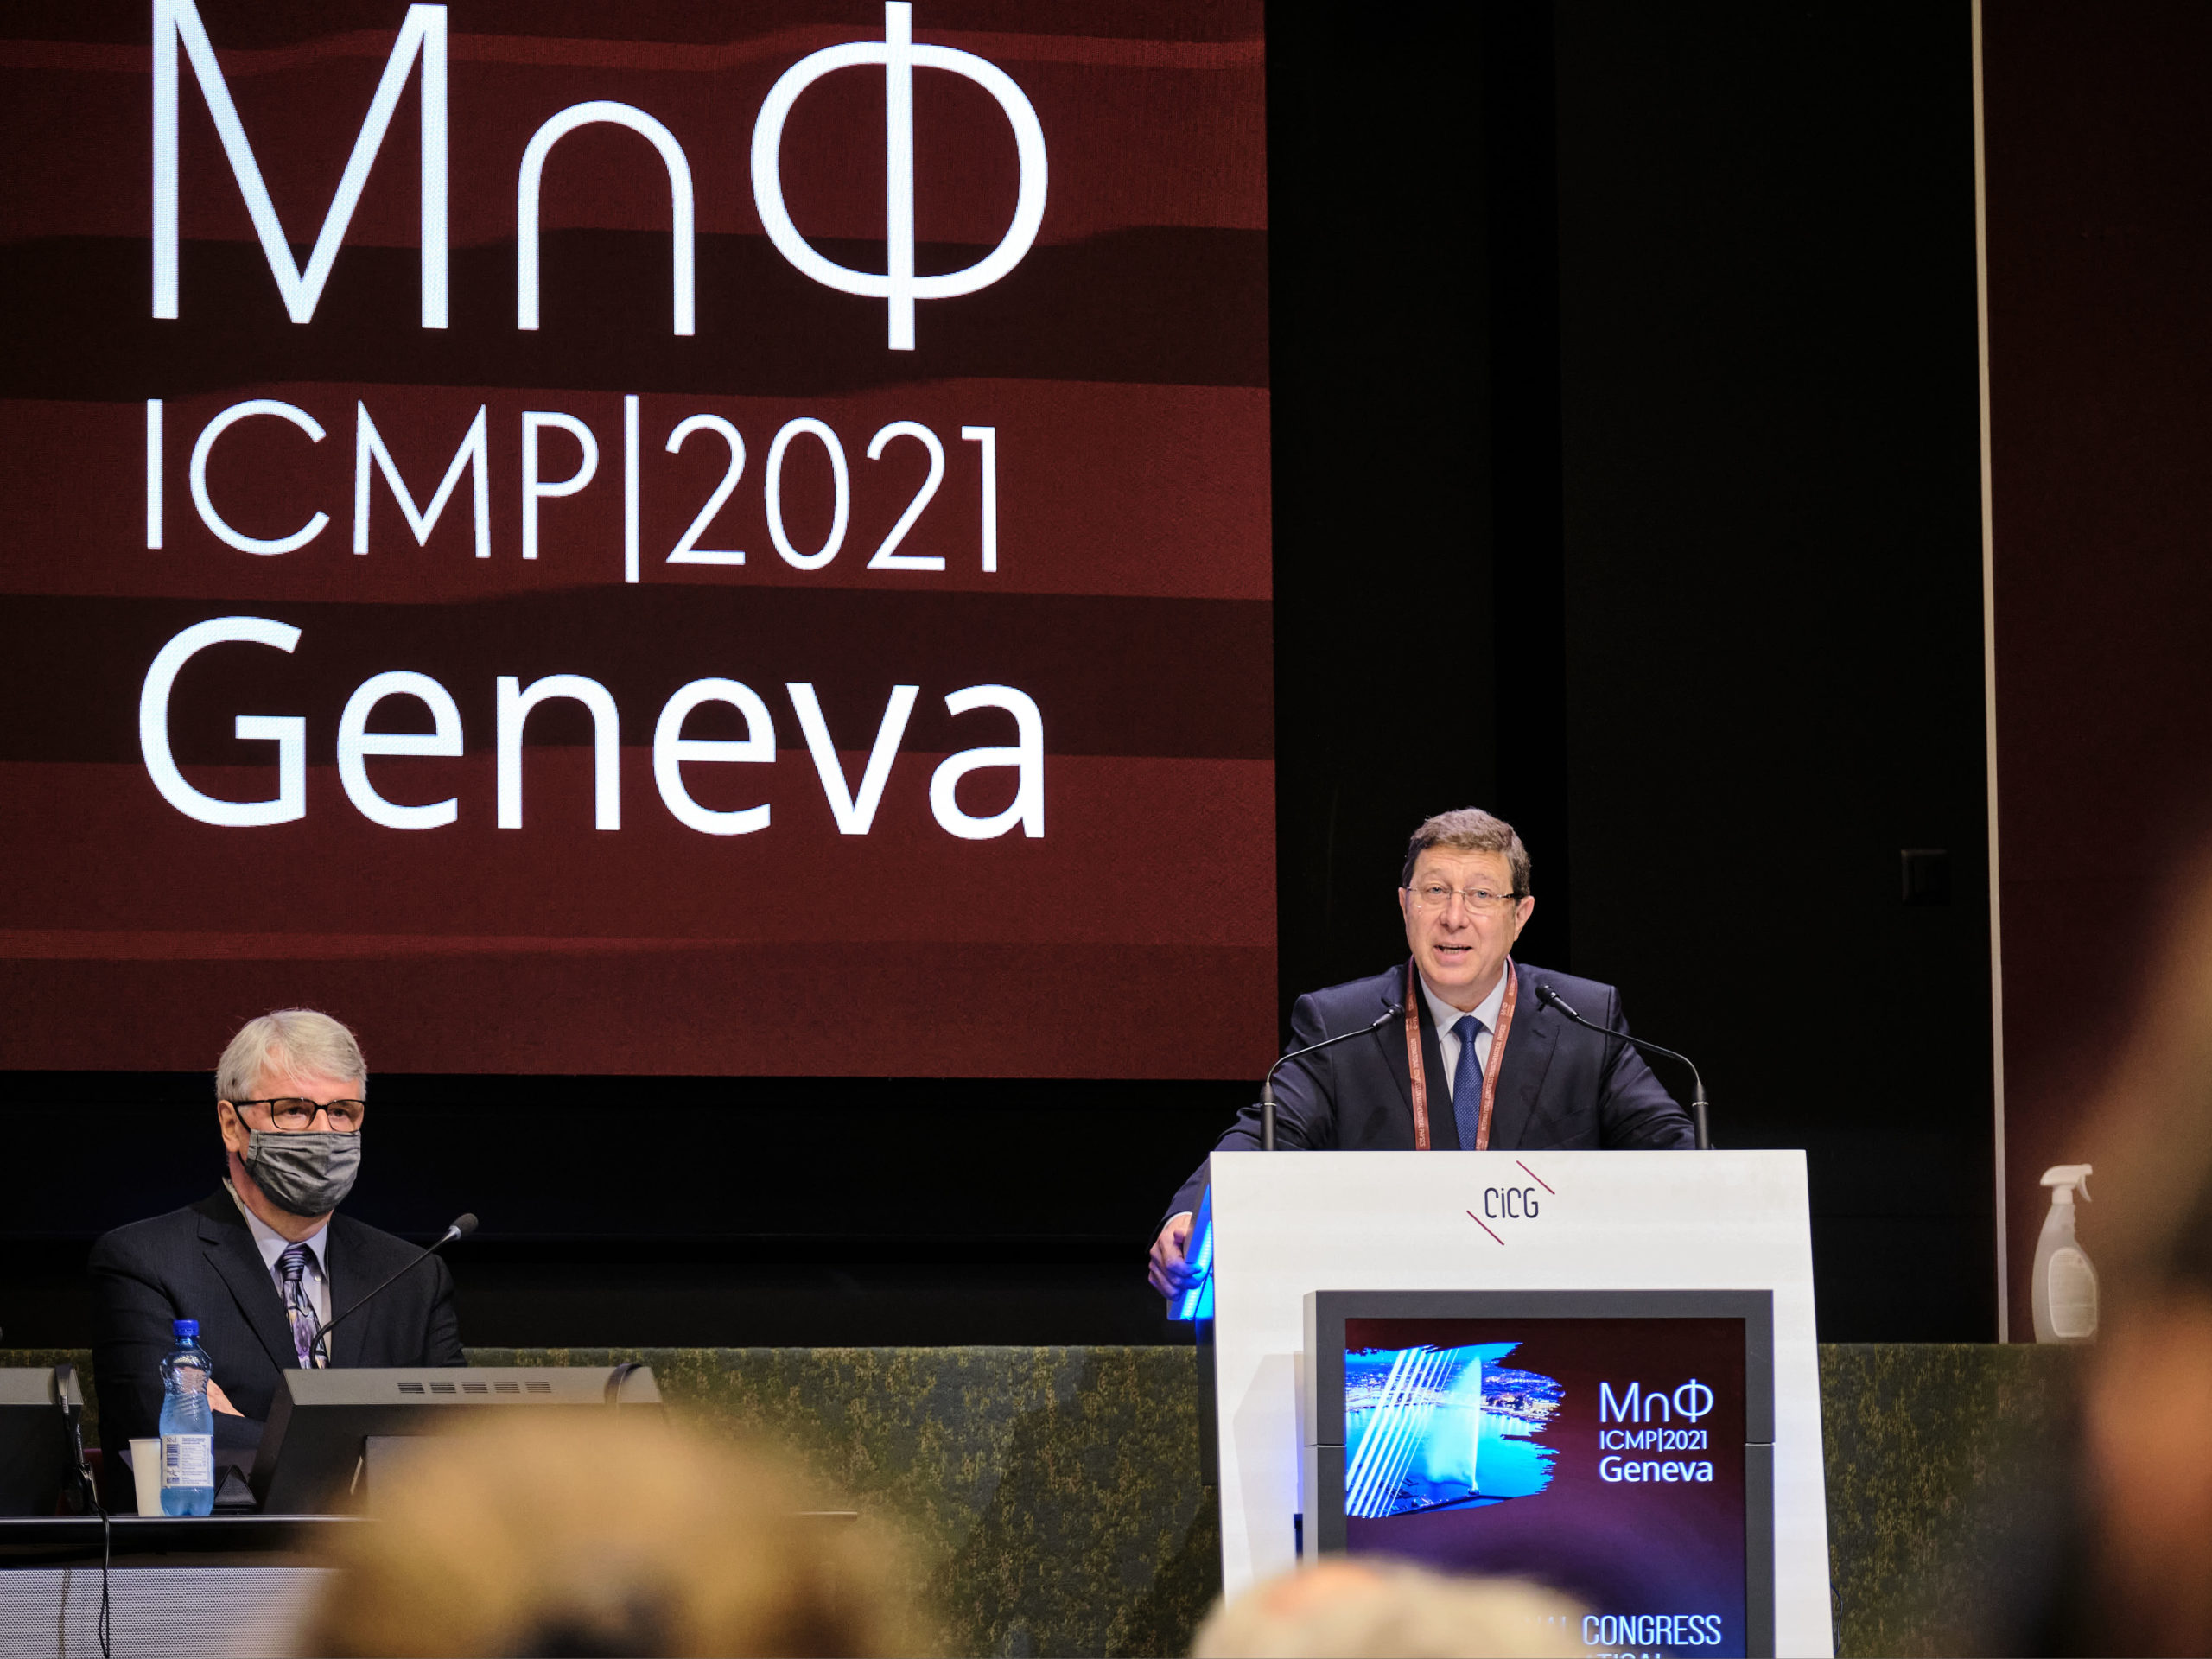 ICMP 2021 Videos & Photographs